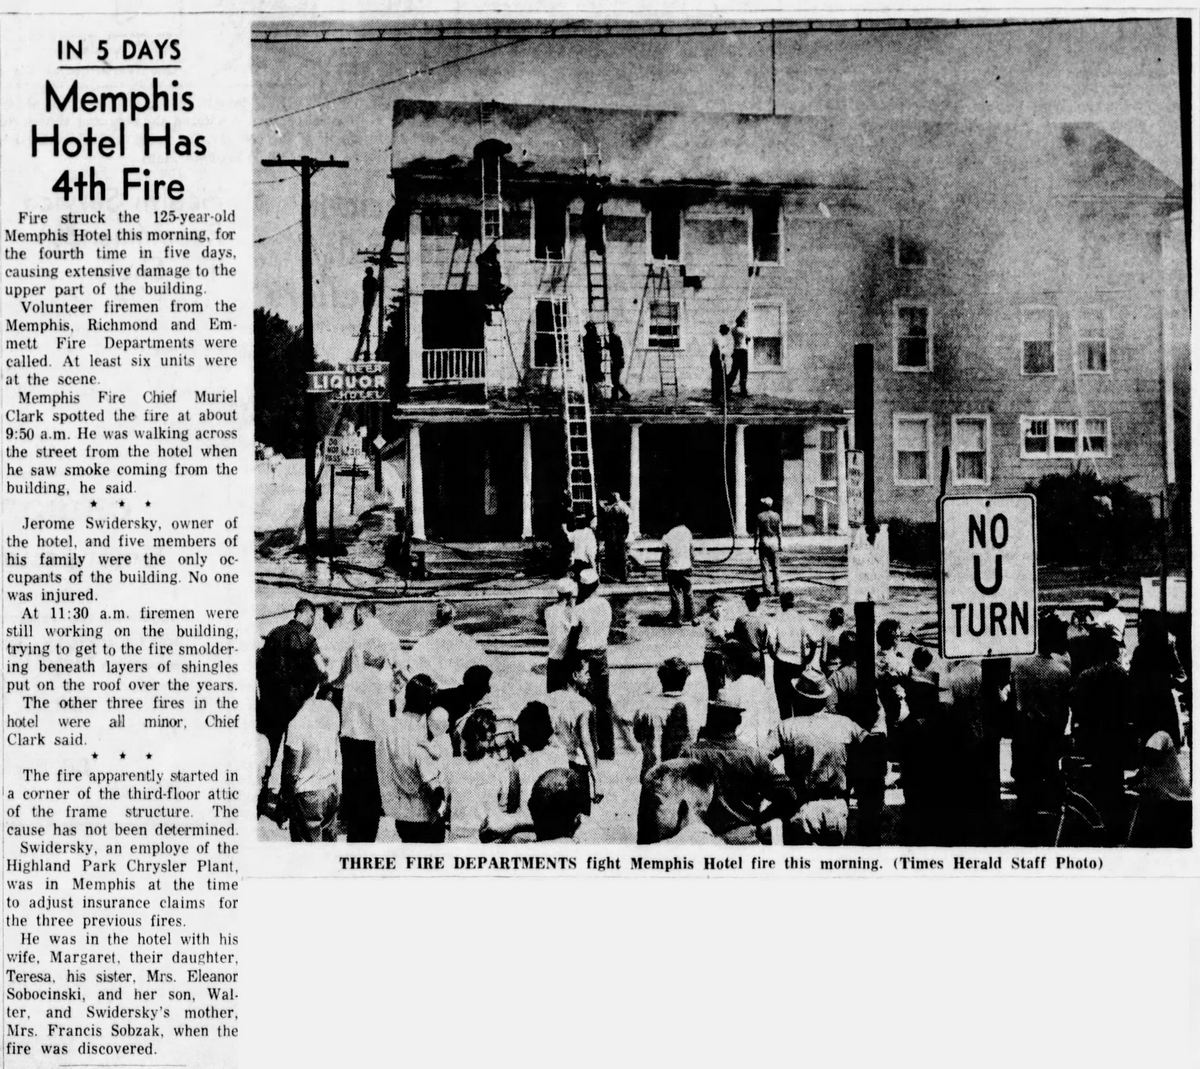 Memphis Hotel (Knickerbocker Hotel) - Jul 25 1962 Article On Fires